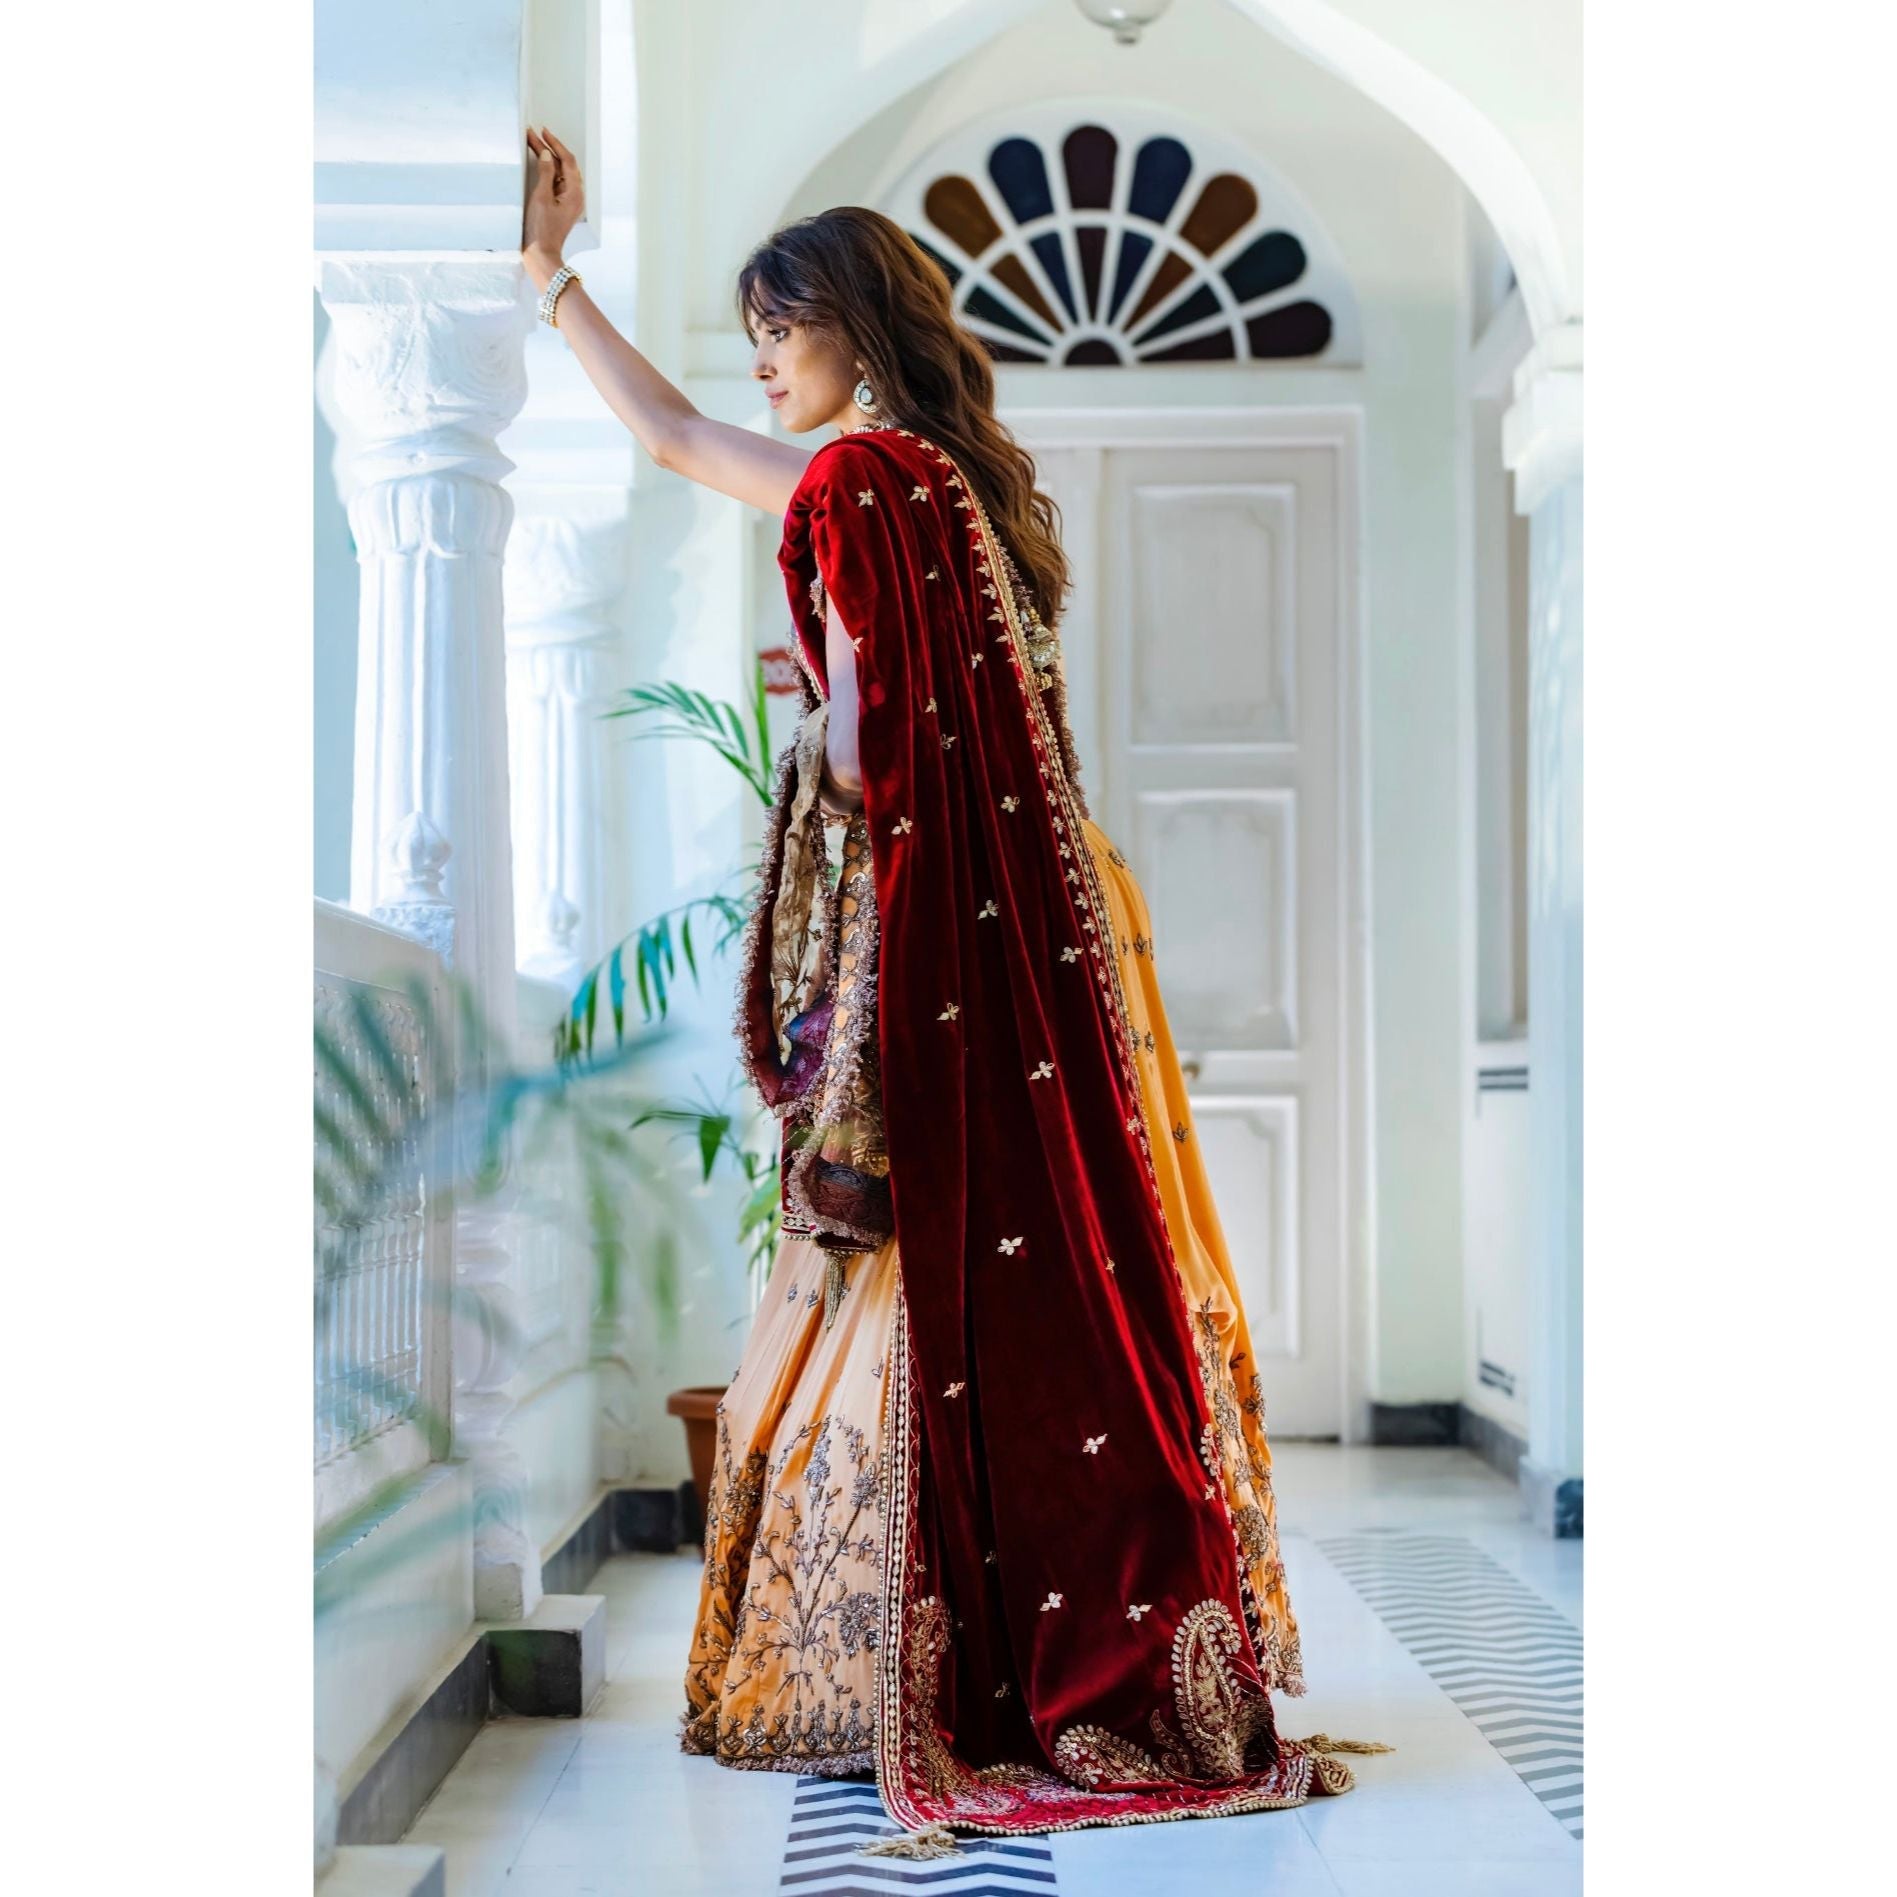 Mustard and Maroon Lehenga Set - Indian Designer Bridal Wedding Outfit